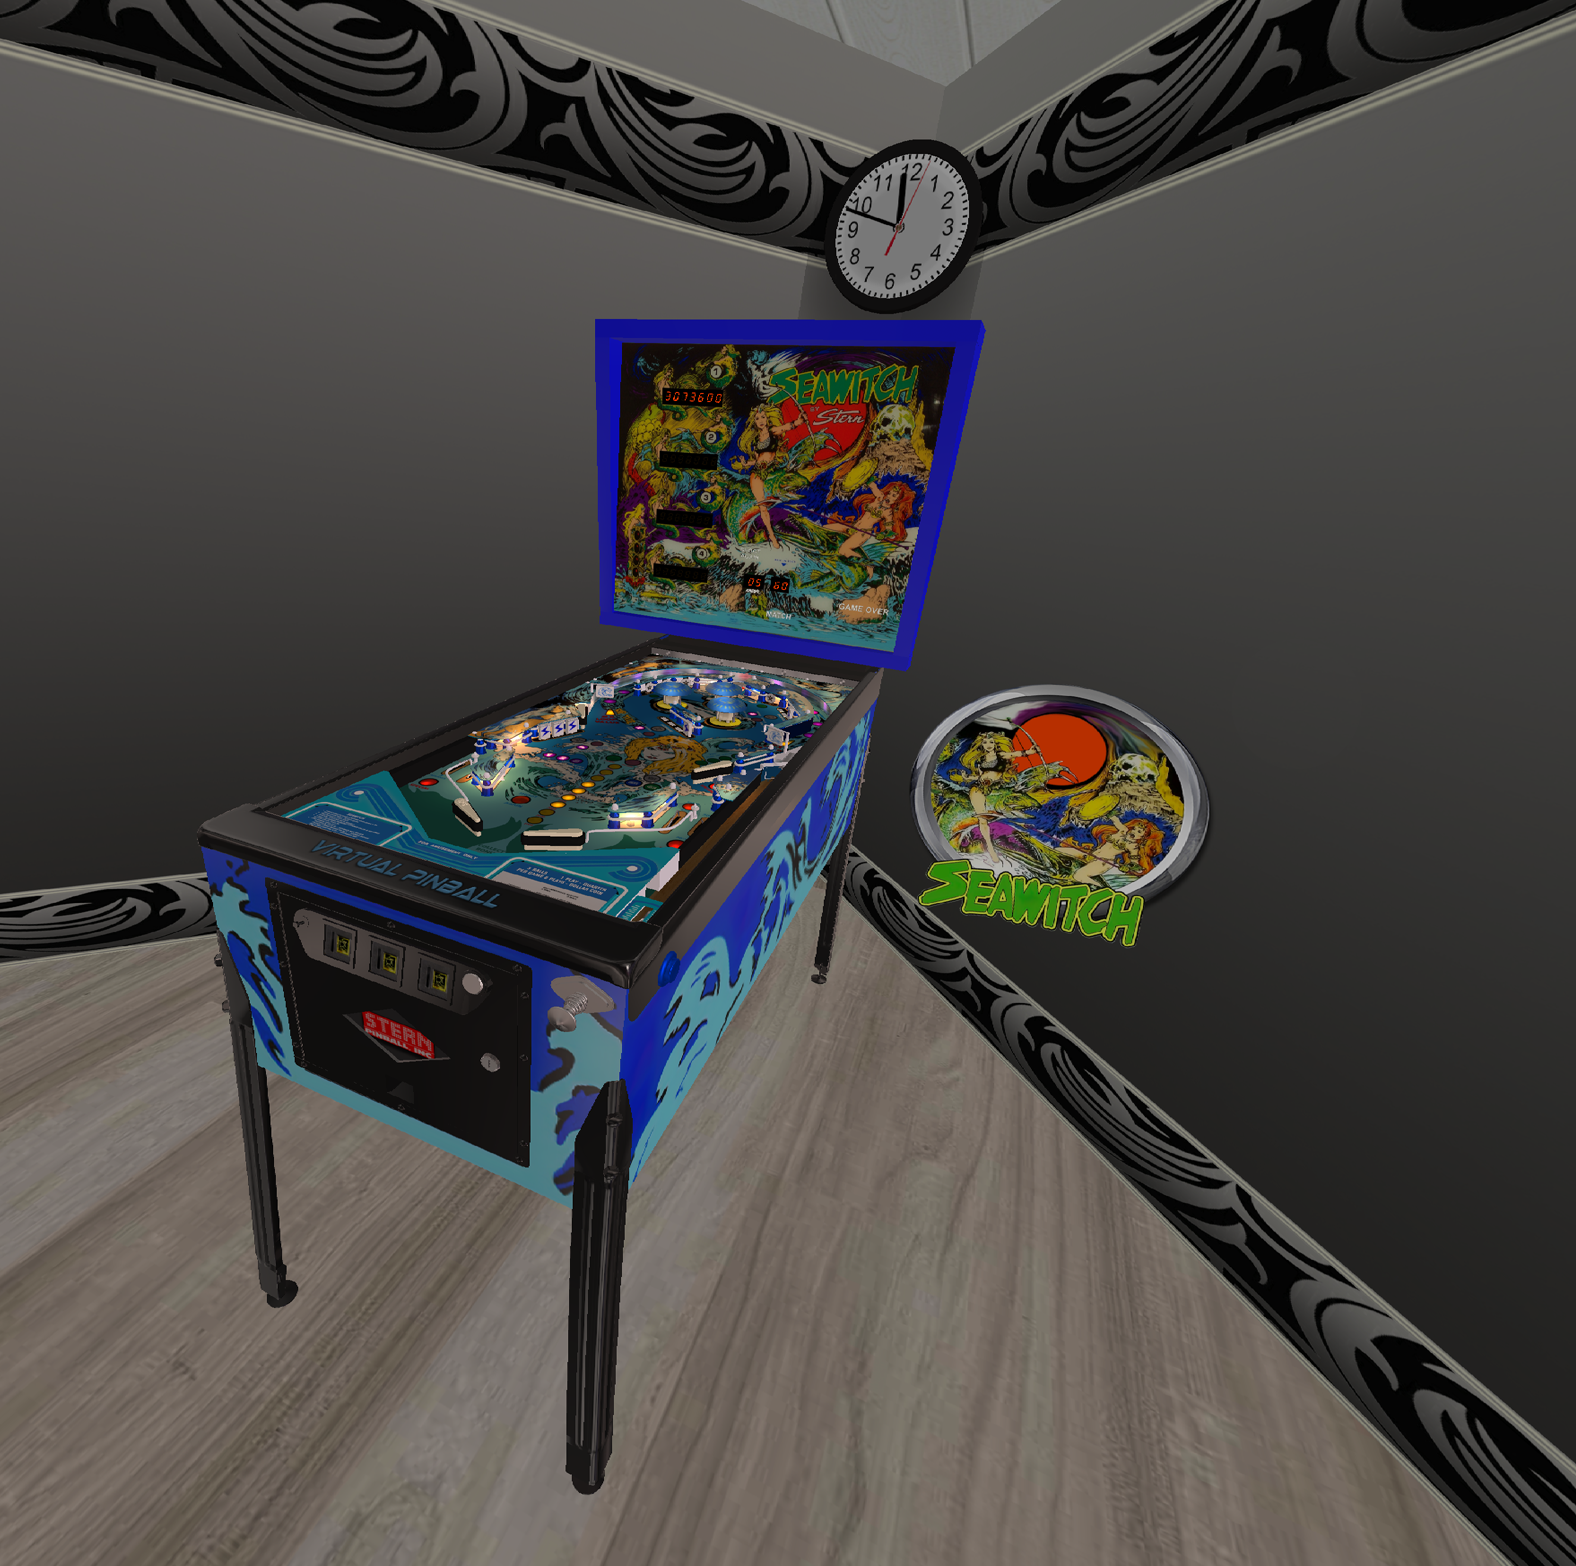 VR Room Seawitch (Stern 1980) 1.0.0